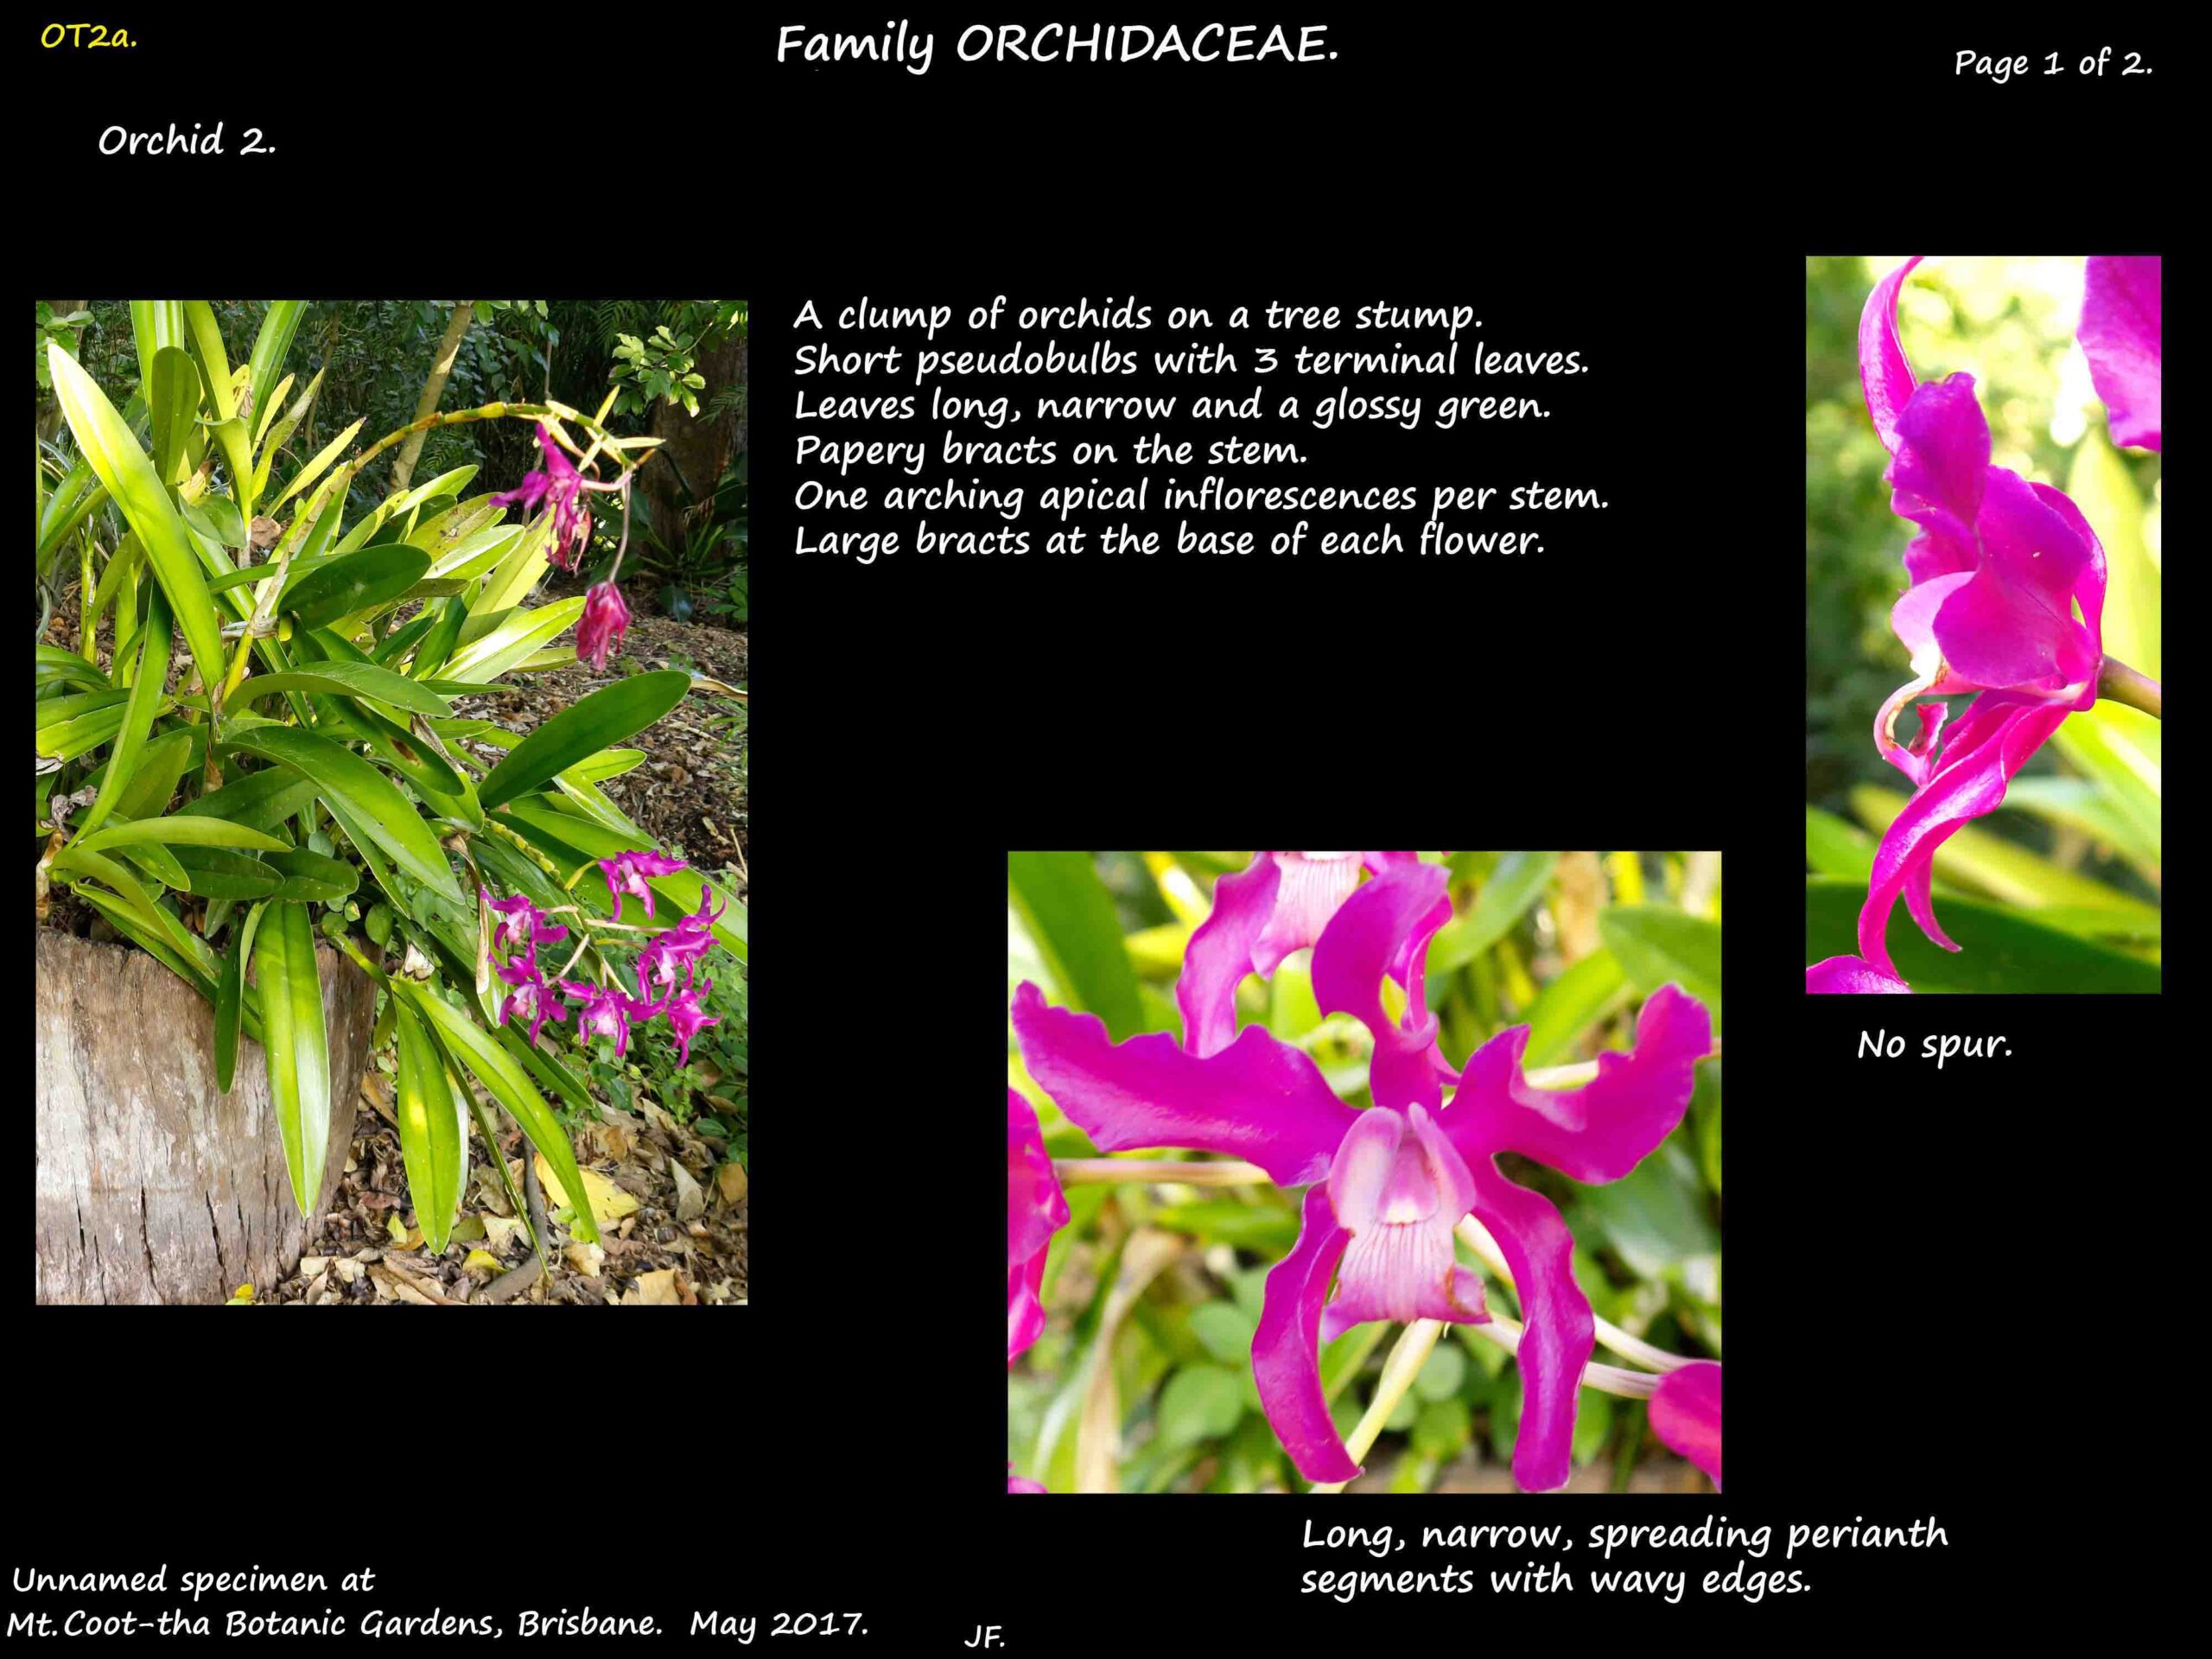 2a An orchid with pseudobulbs